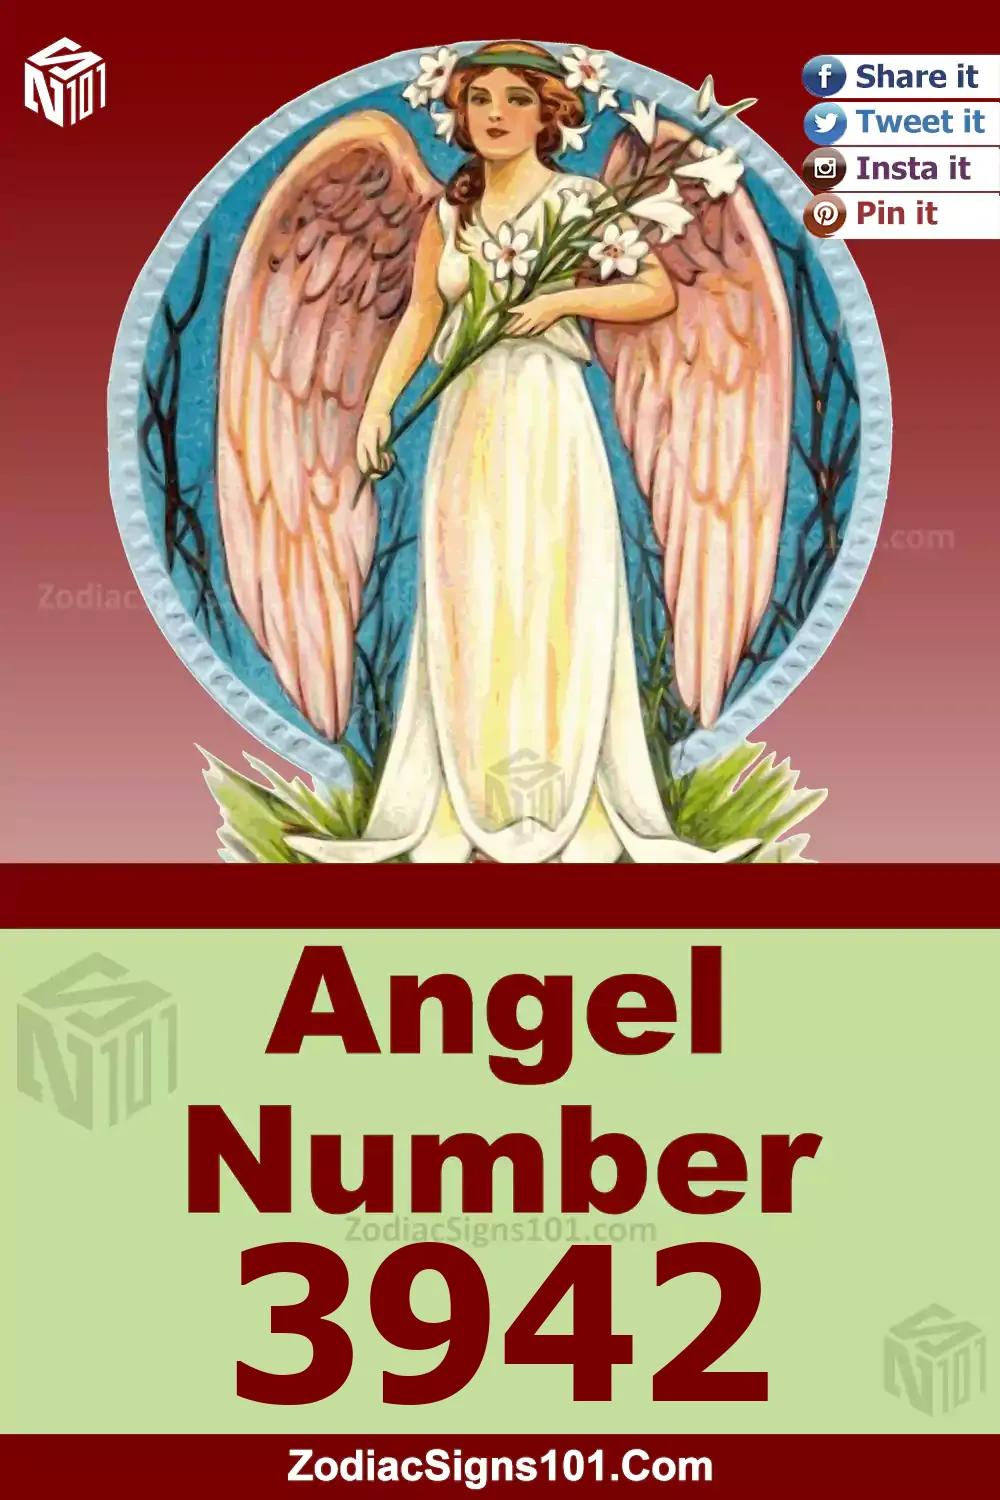 3942-Angel-Number-Meaning.jpg